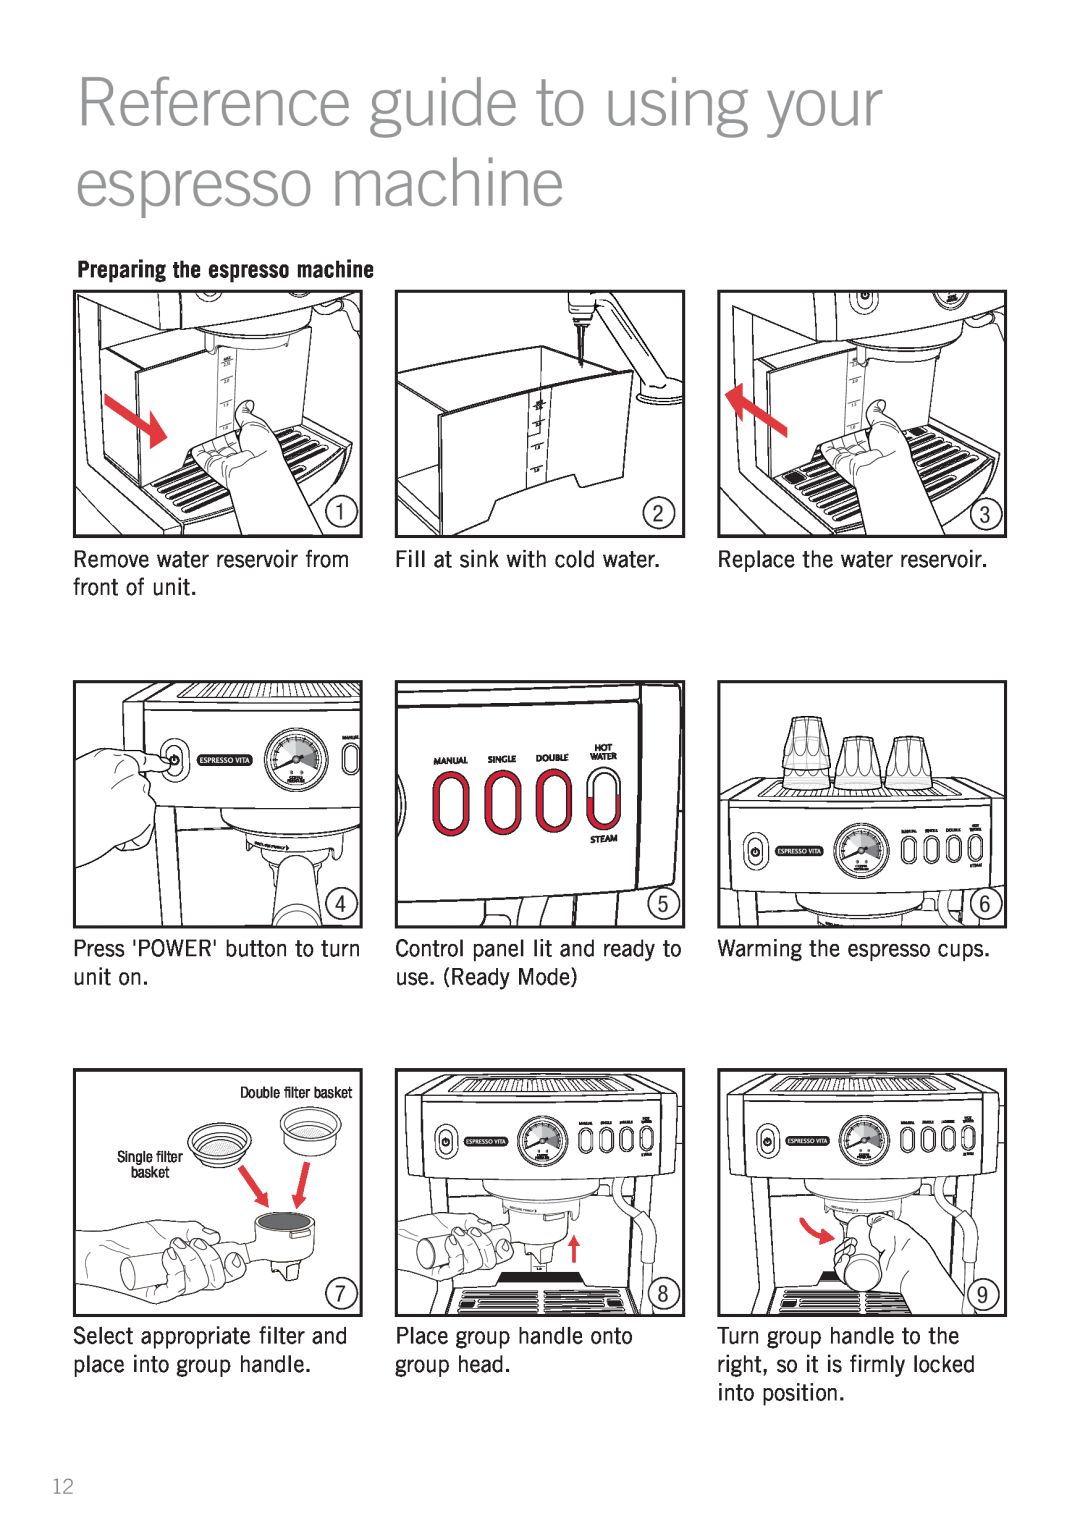 Sunbeam EM6200 manual Reference guide to using your espresso machine 